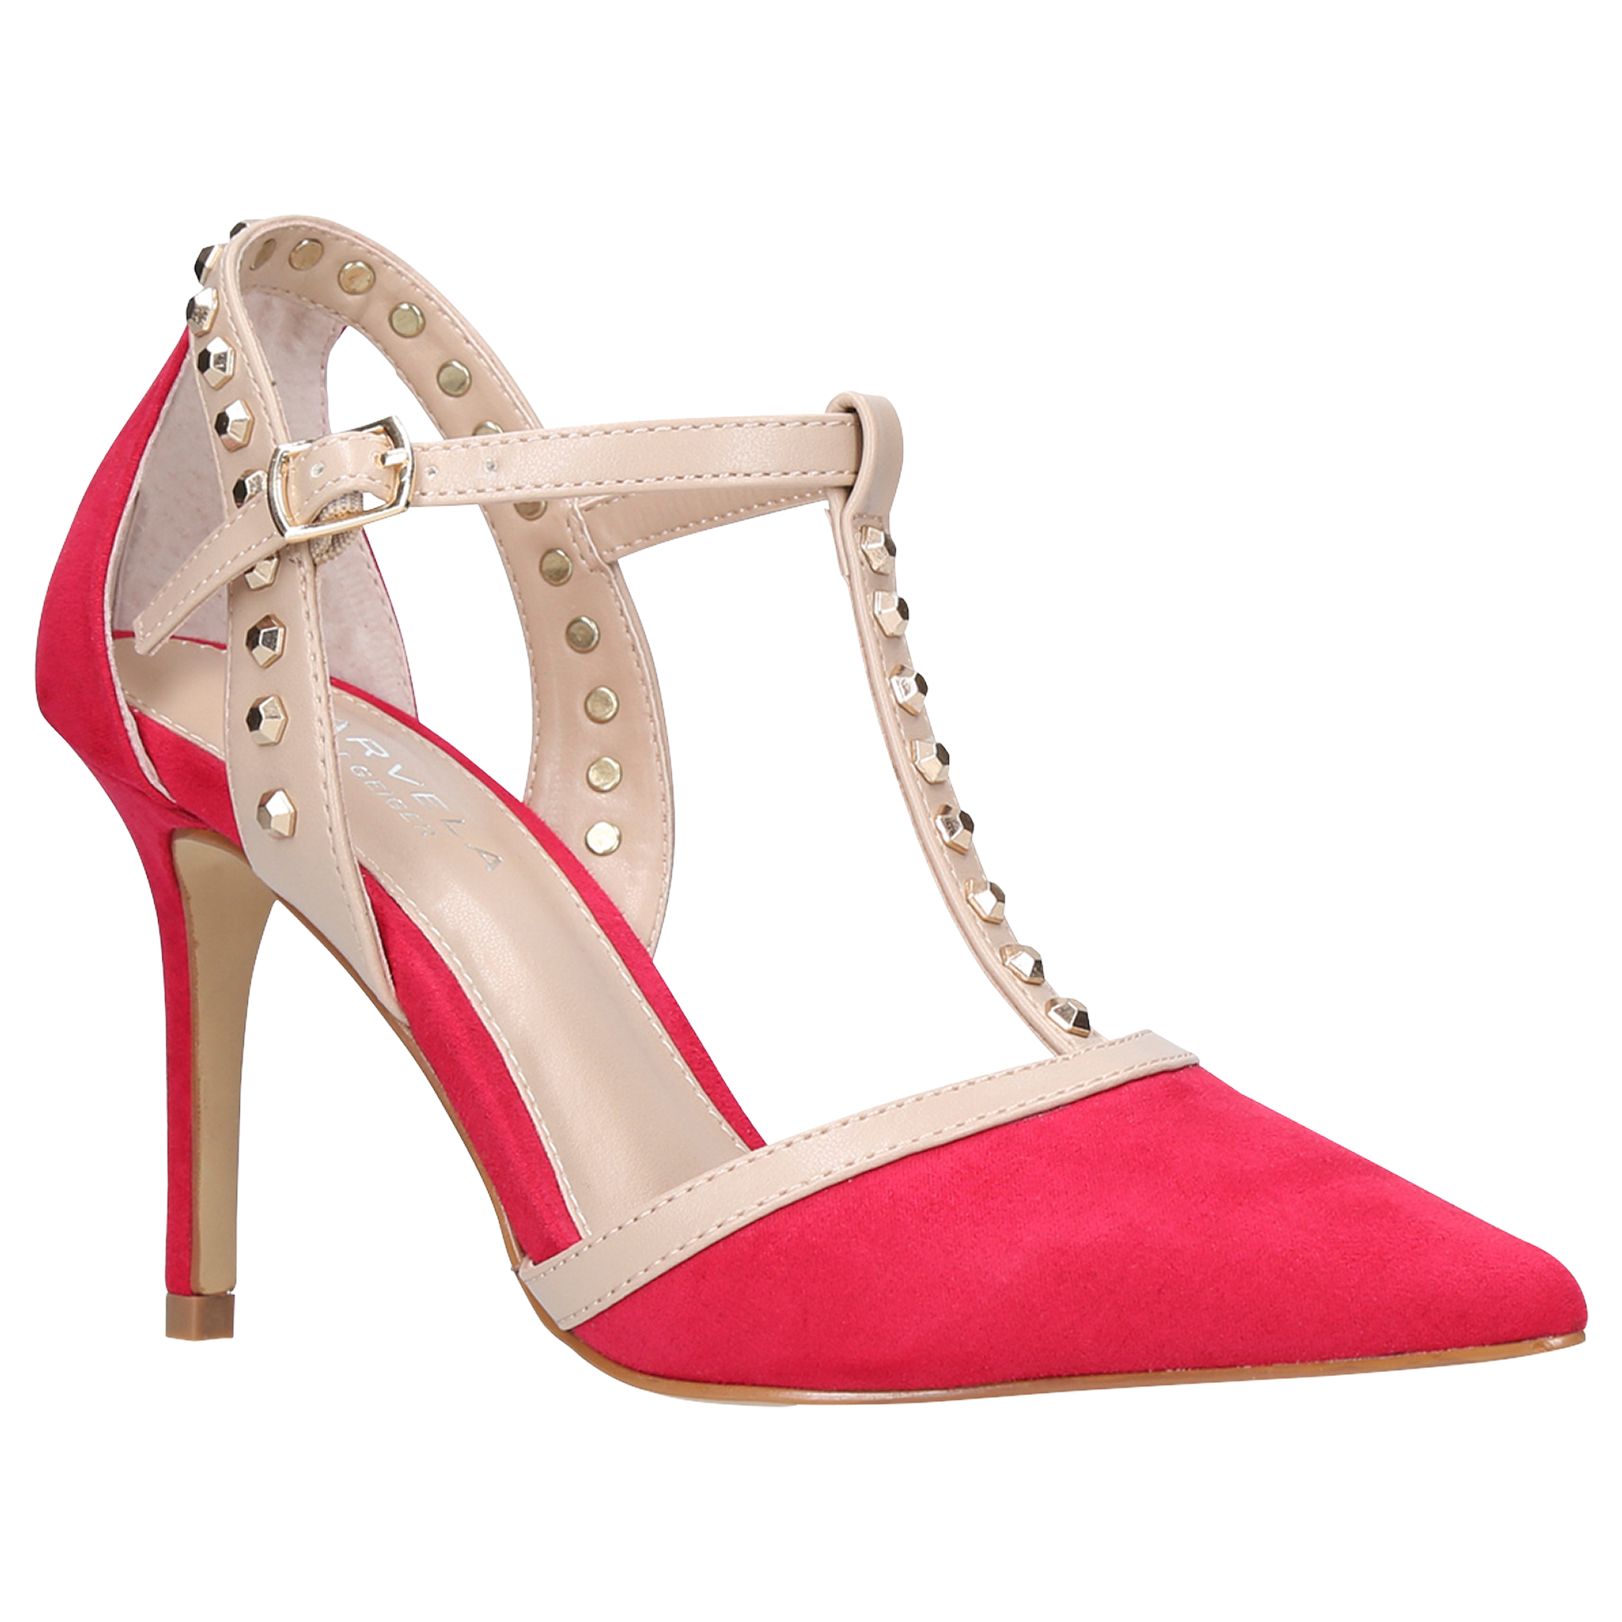 carvela studded heels